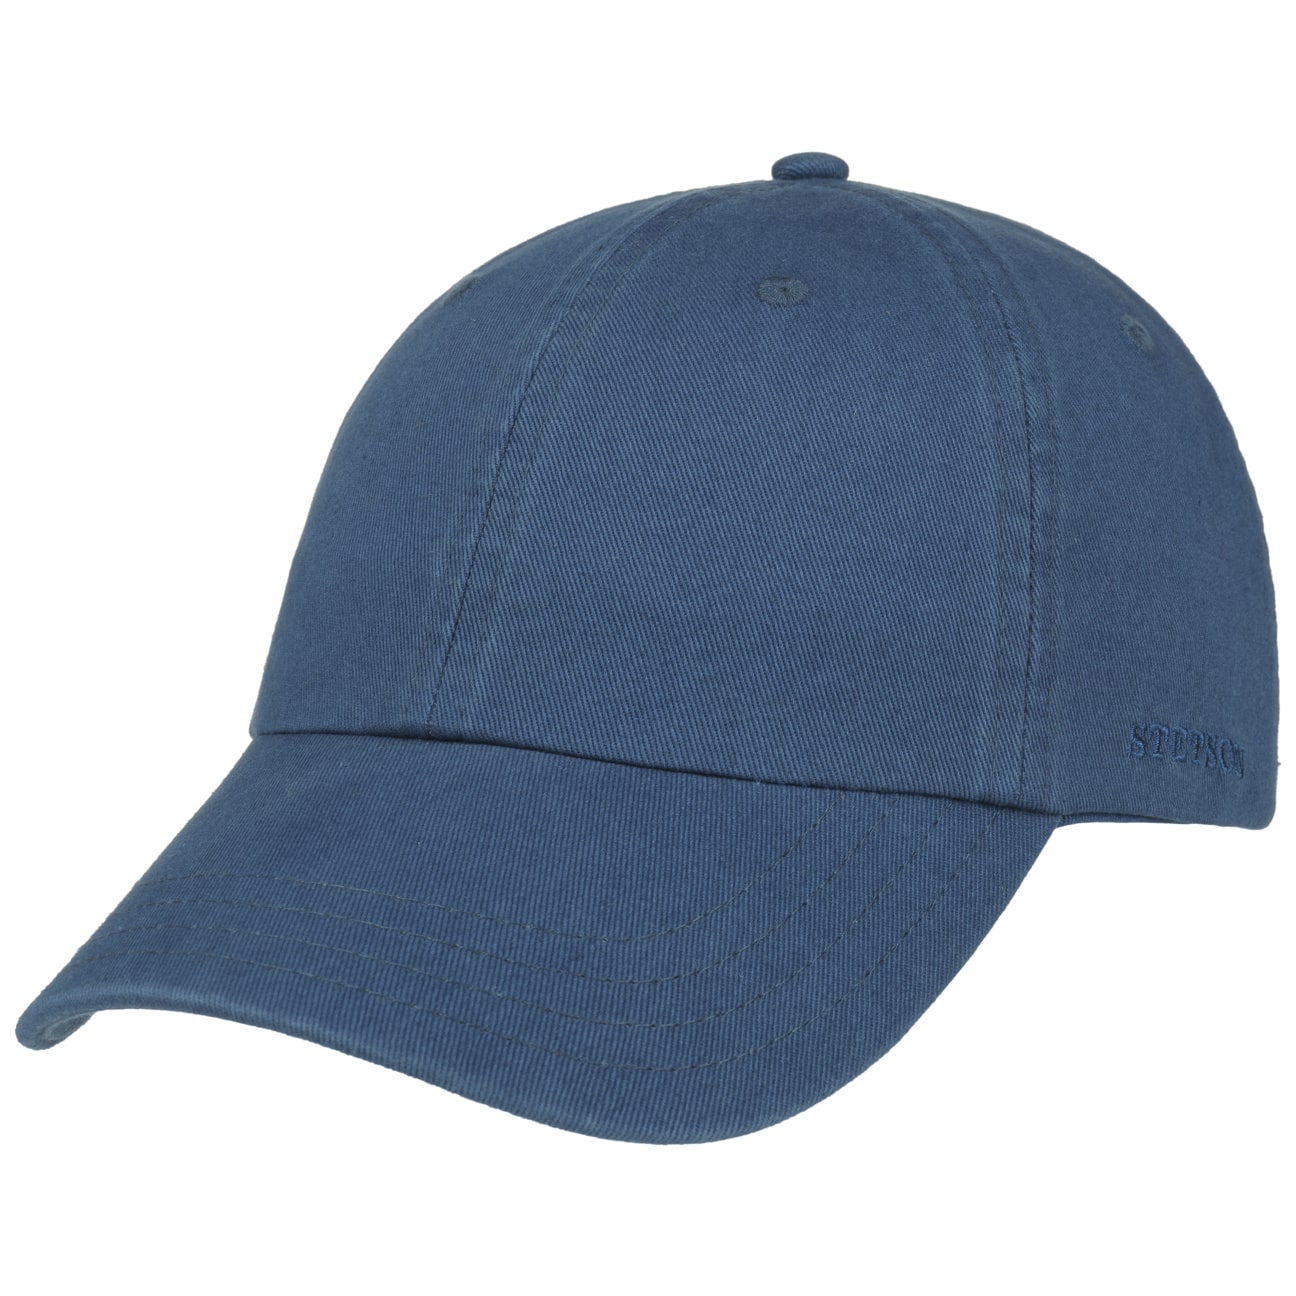 Stetson 7711101 23 Rector royal blue baseball cap